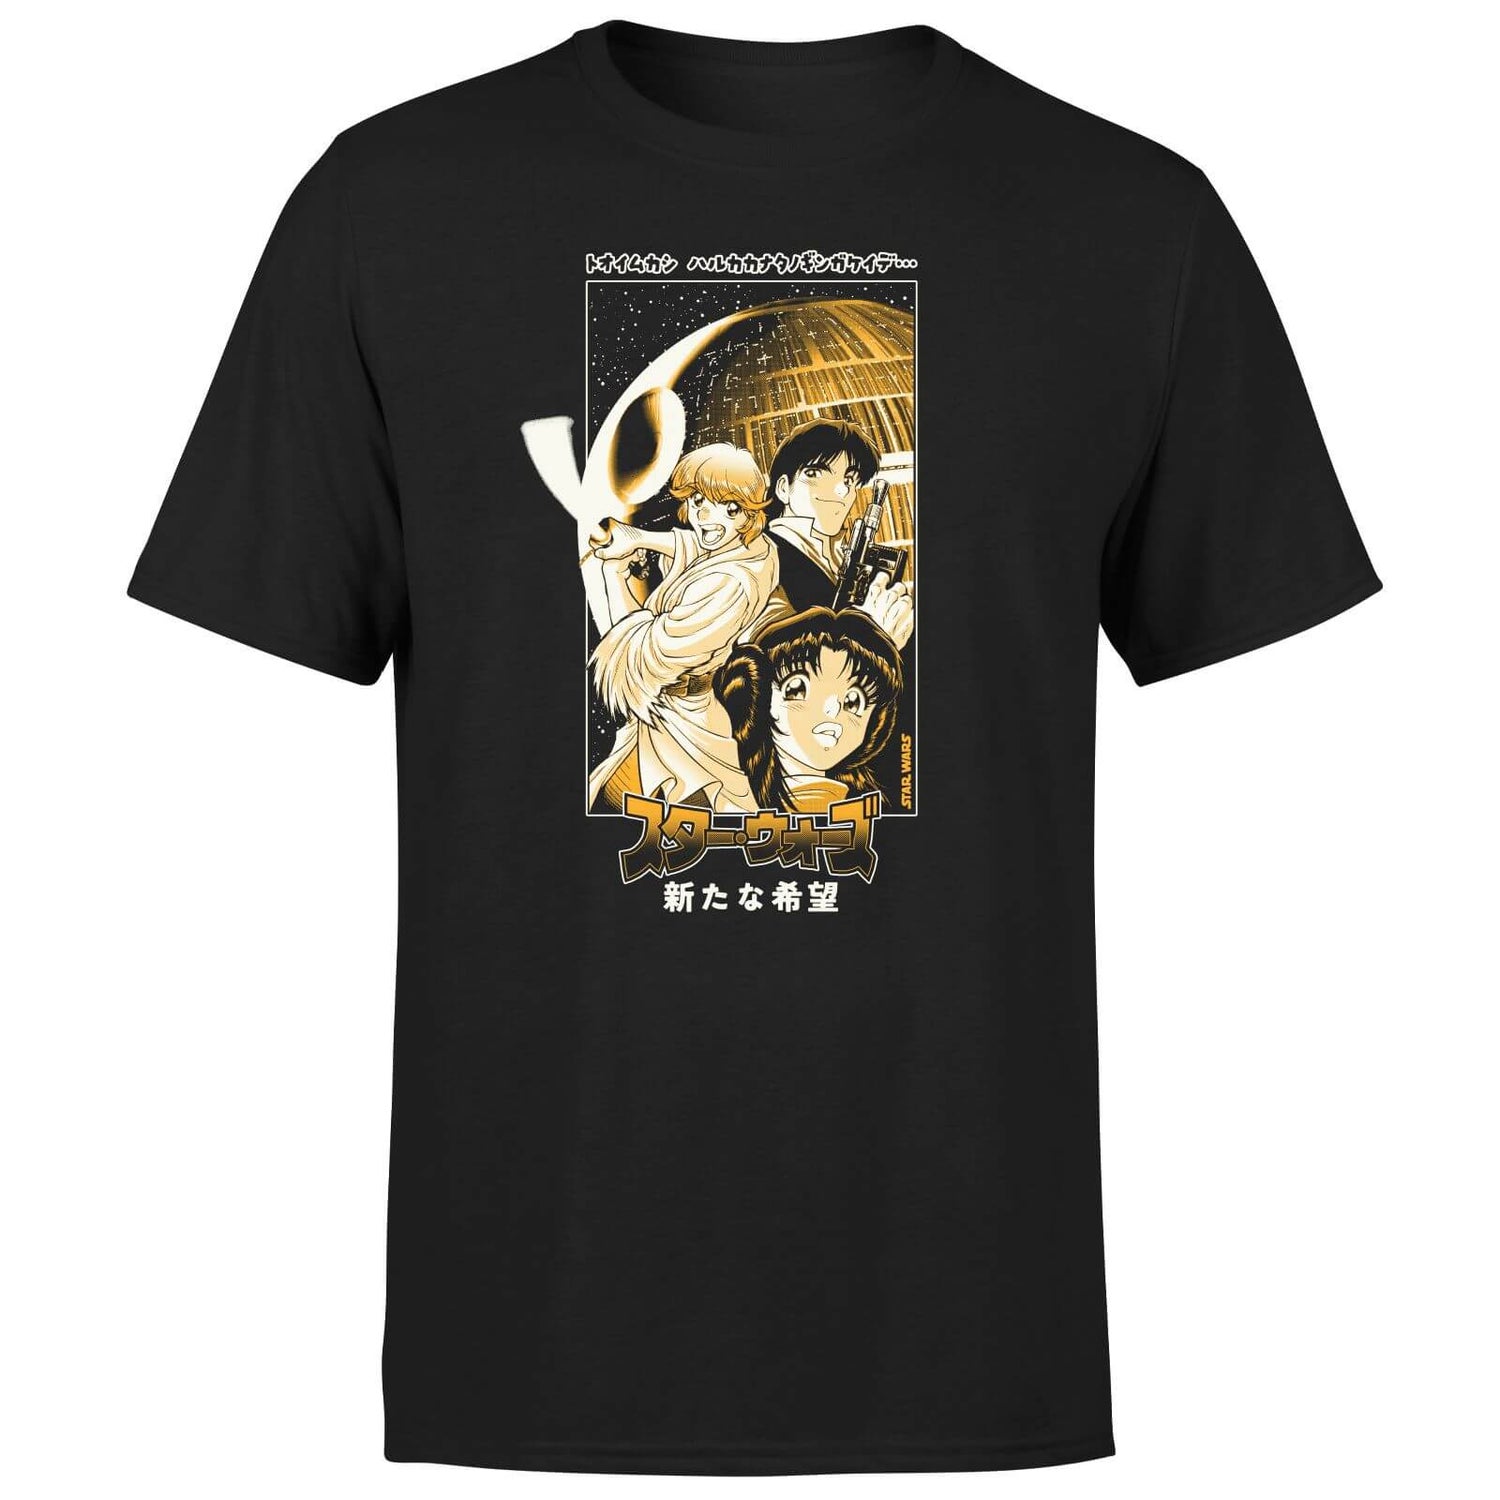 Star Wars A New Hope Men's T-Shirt - Black